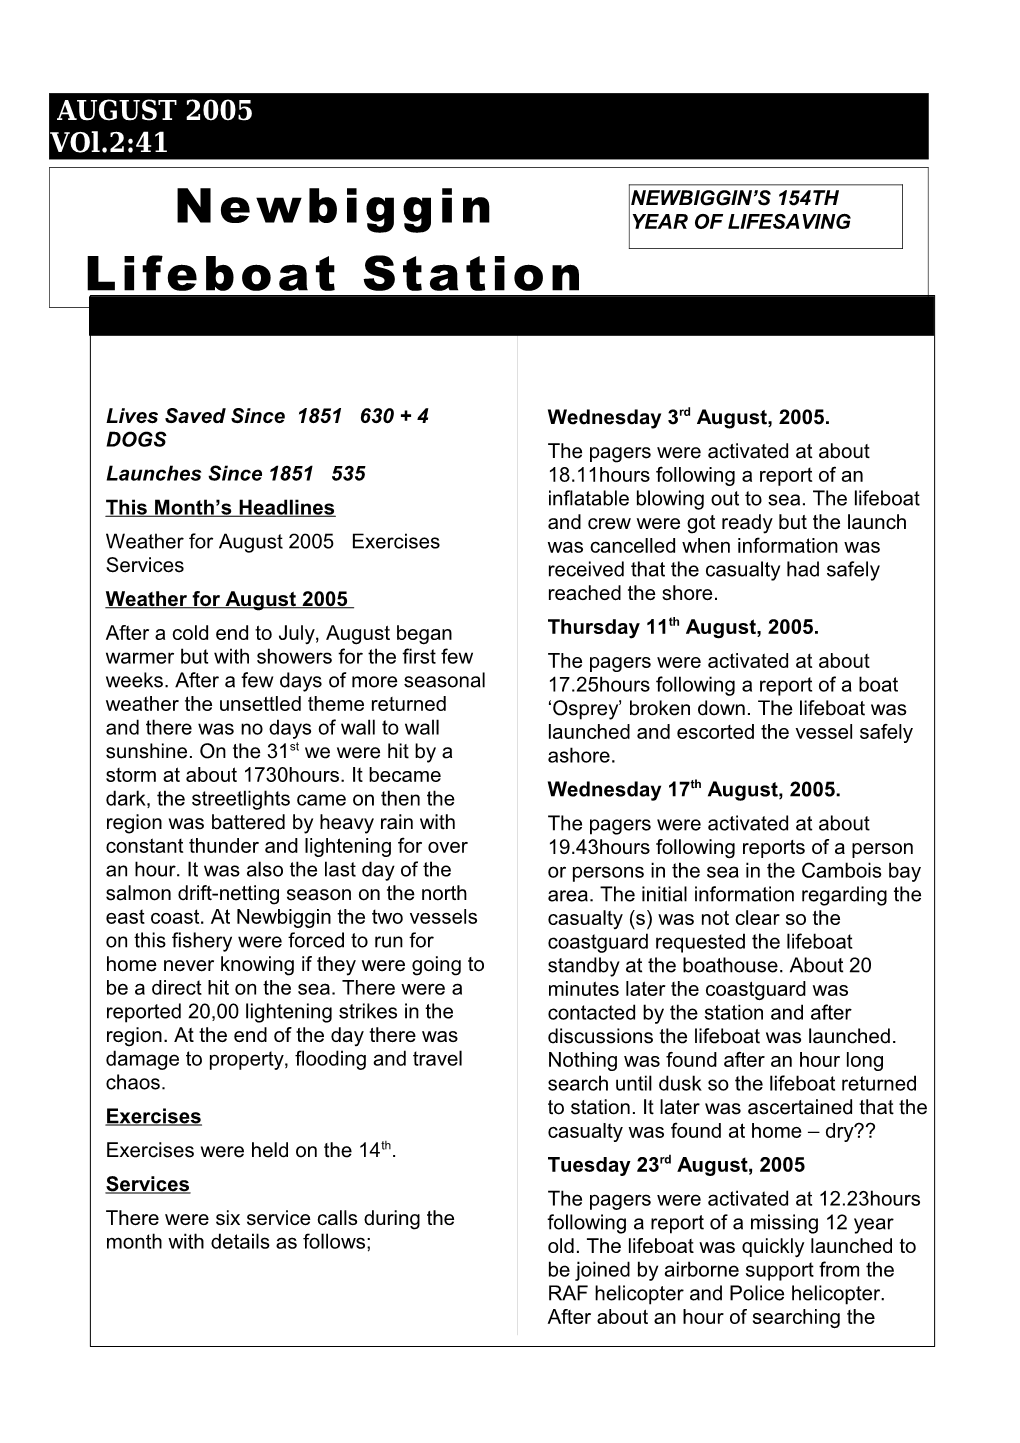 2 Newbiggin Lifeboat Station - 2